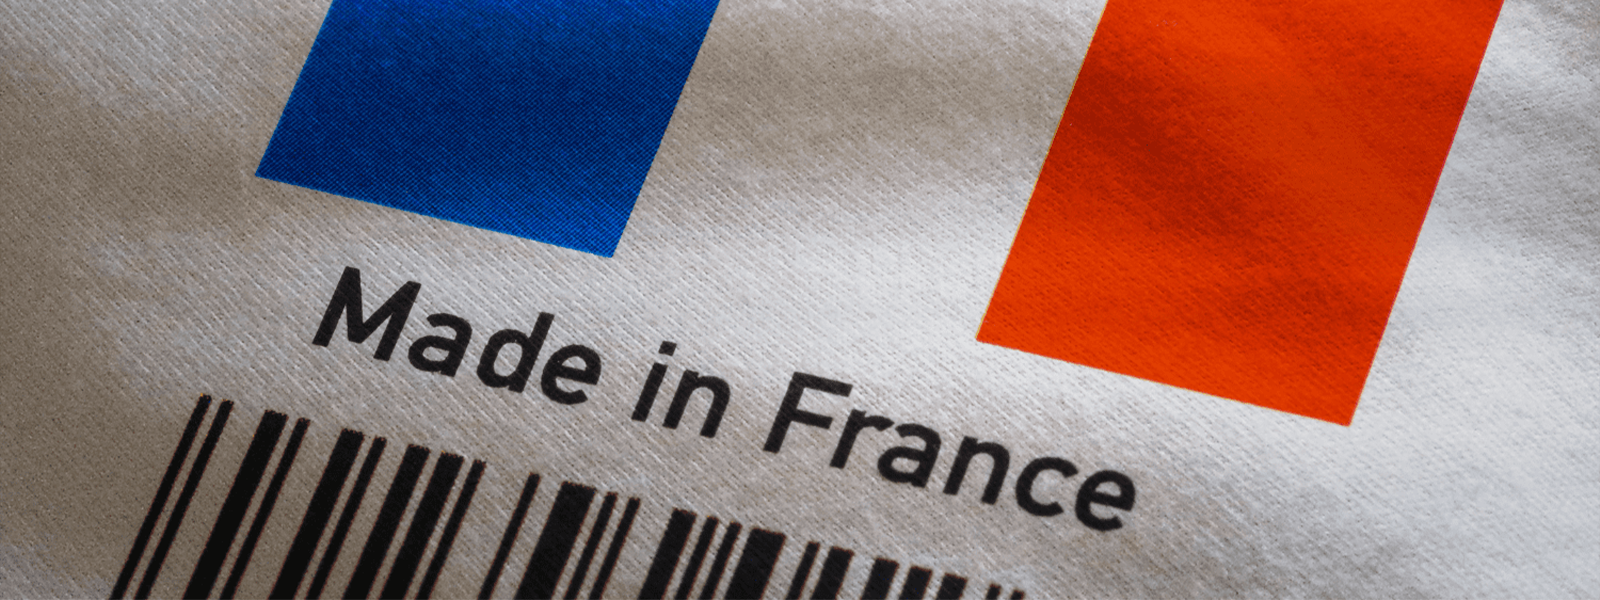 Logo Made in France